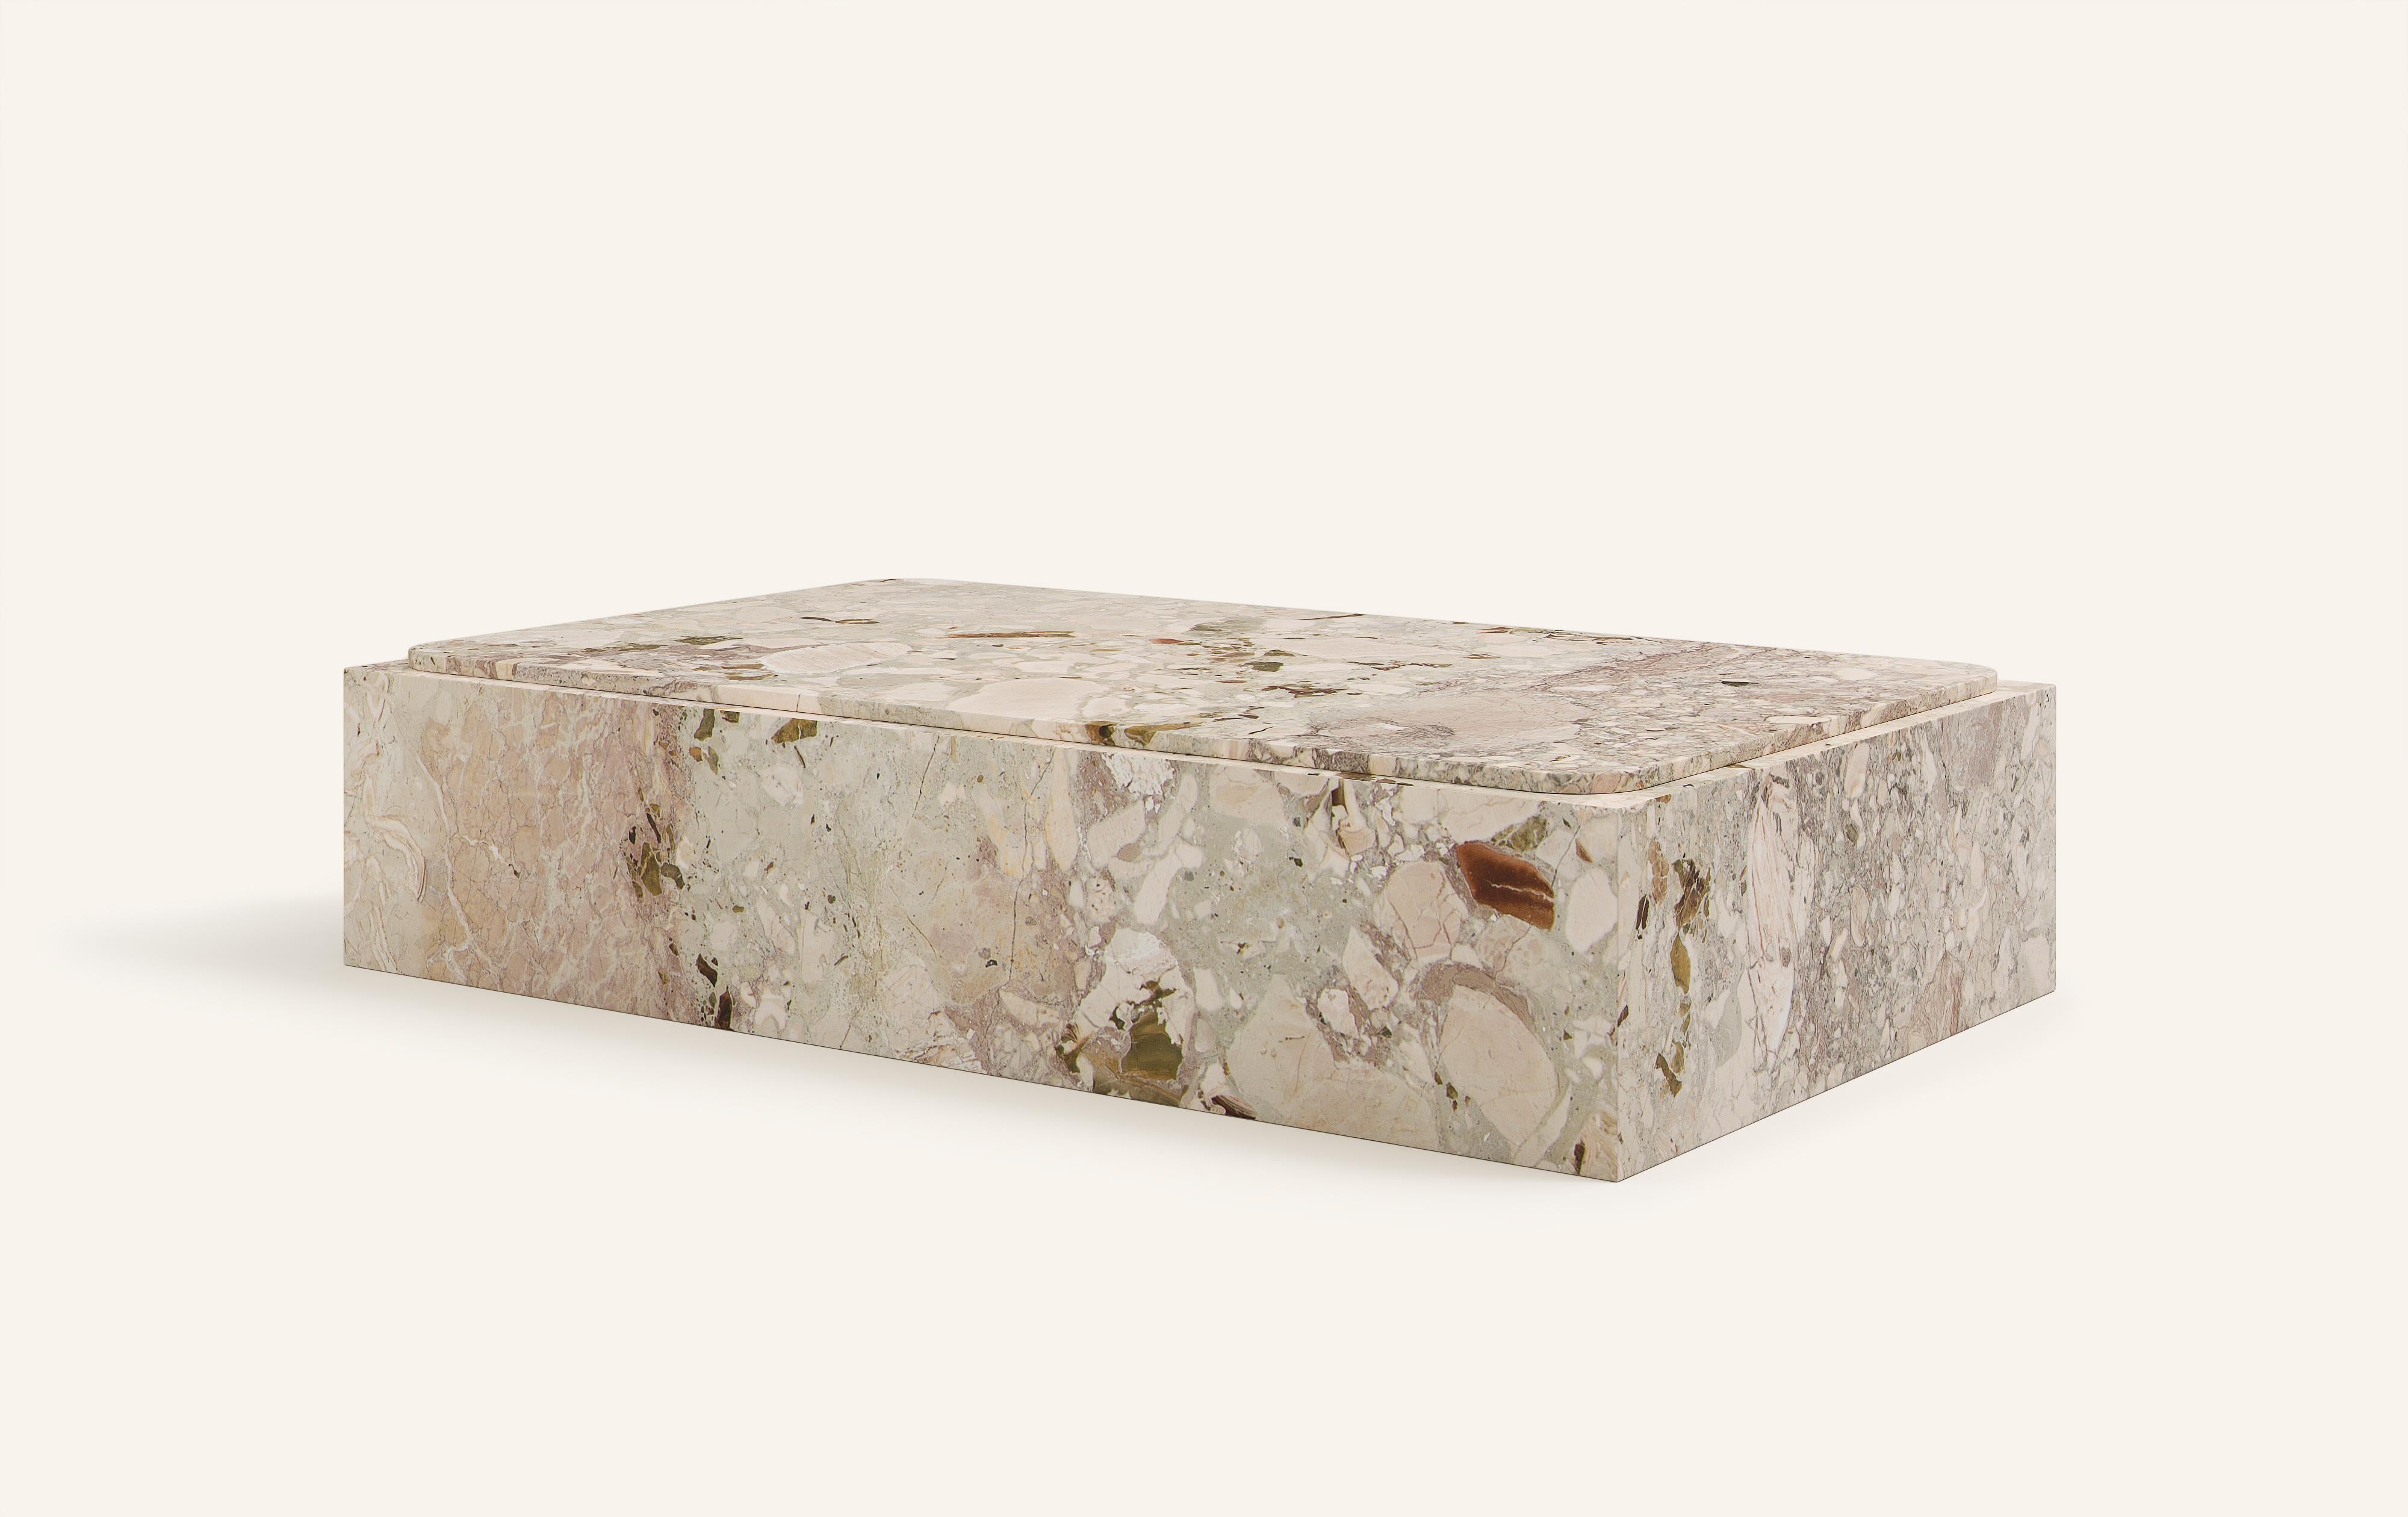 Organic Modern FORM(LA) Cubo Rectangle Plinth Coffee Table 72”L x 42”W x 13”H Breccia Marble For Sale